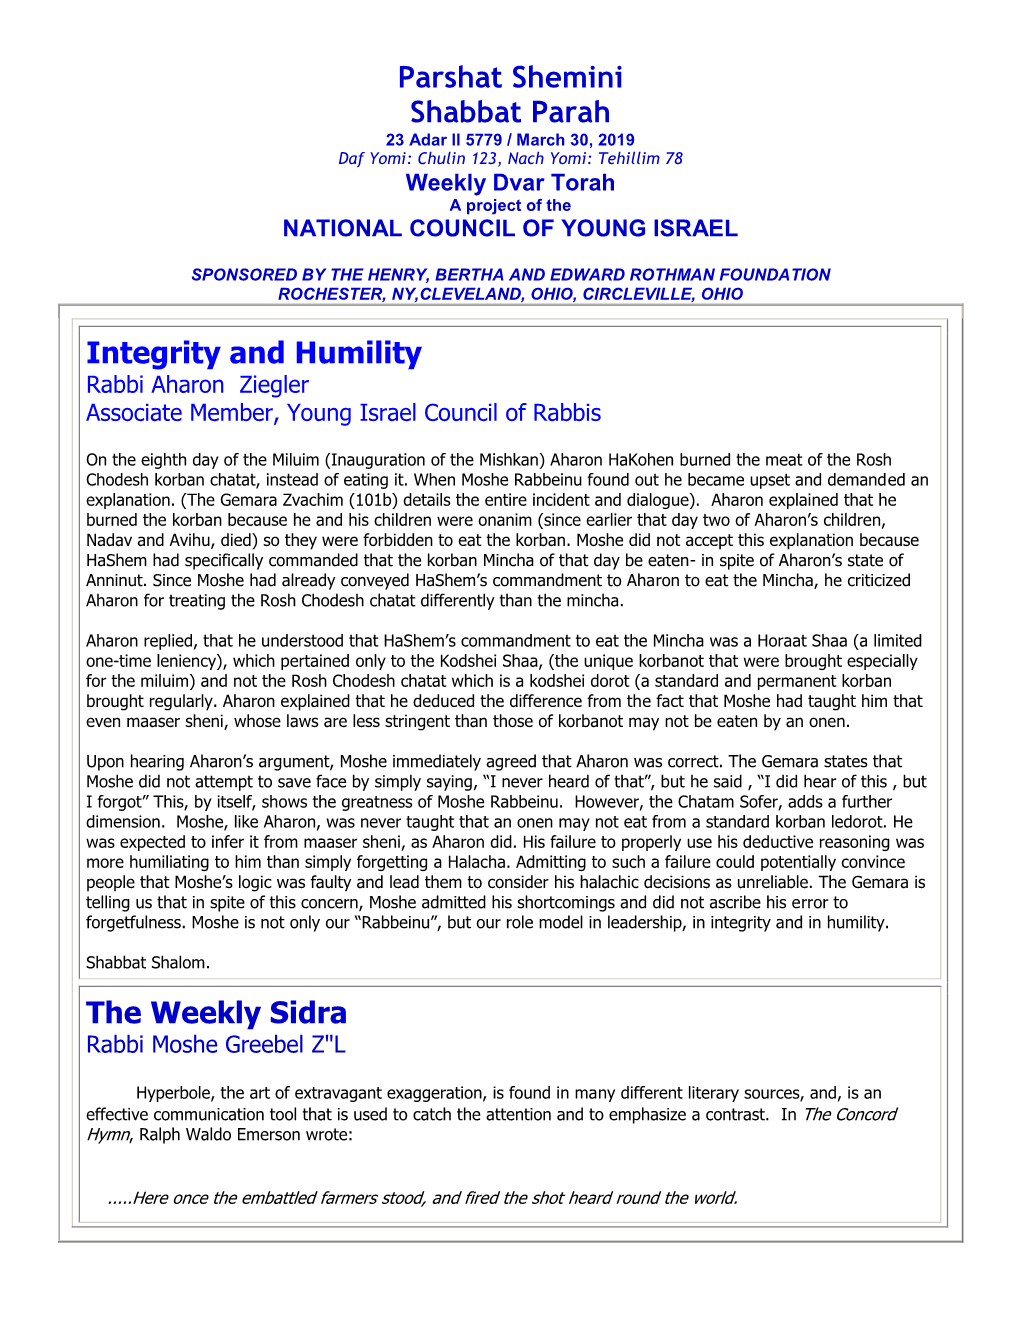 Parshat Shemini Shabbat Parah Integrity and Humility the Weekly